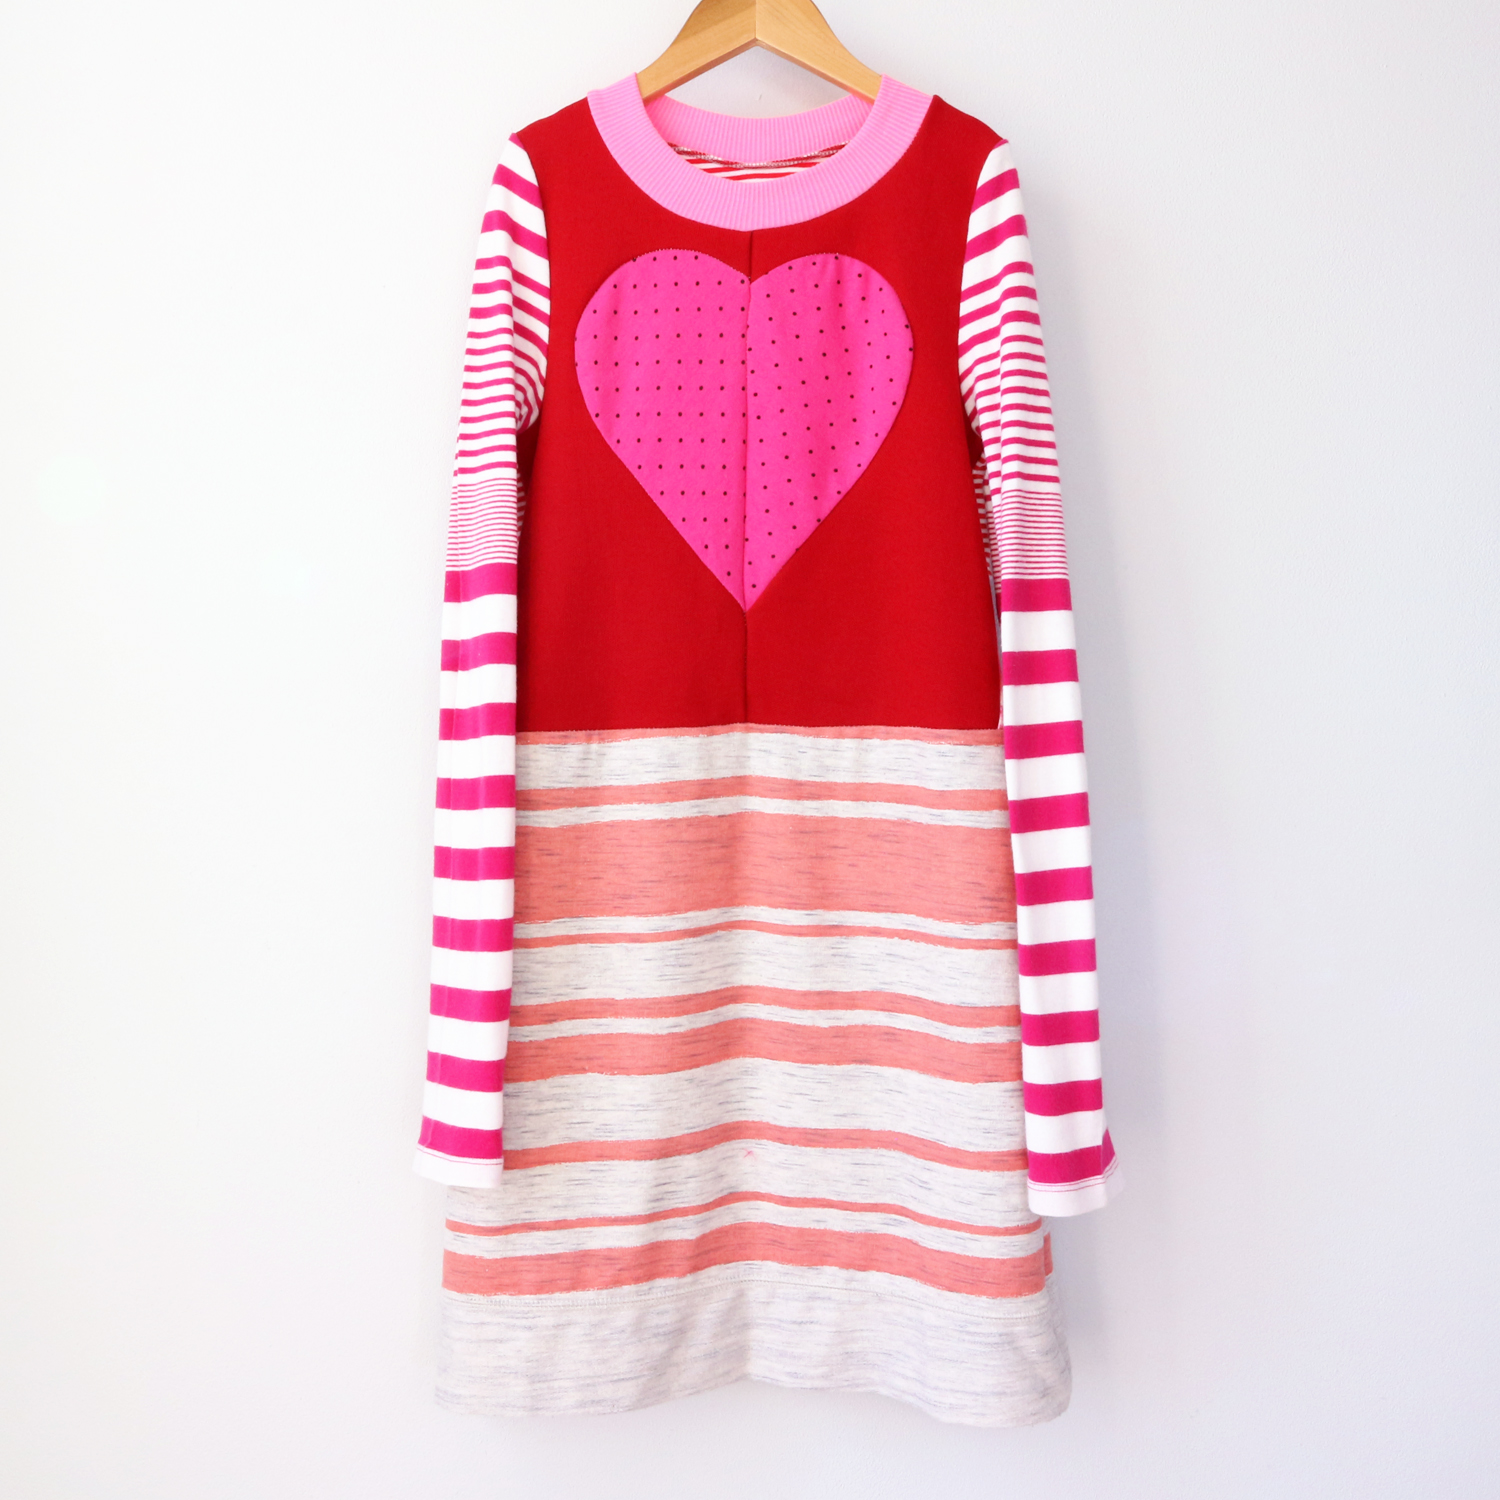 8:10 red:pink:patchwork:heart:stripes:ls.jpg